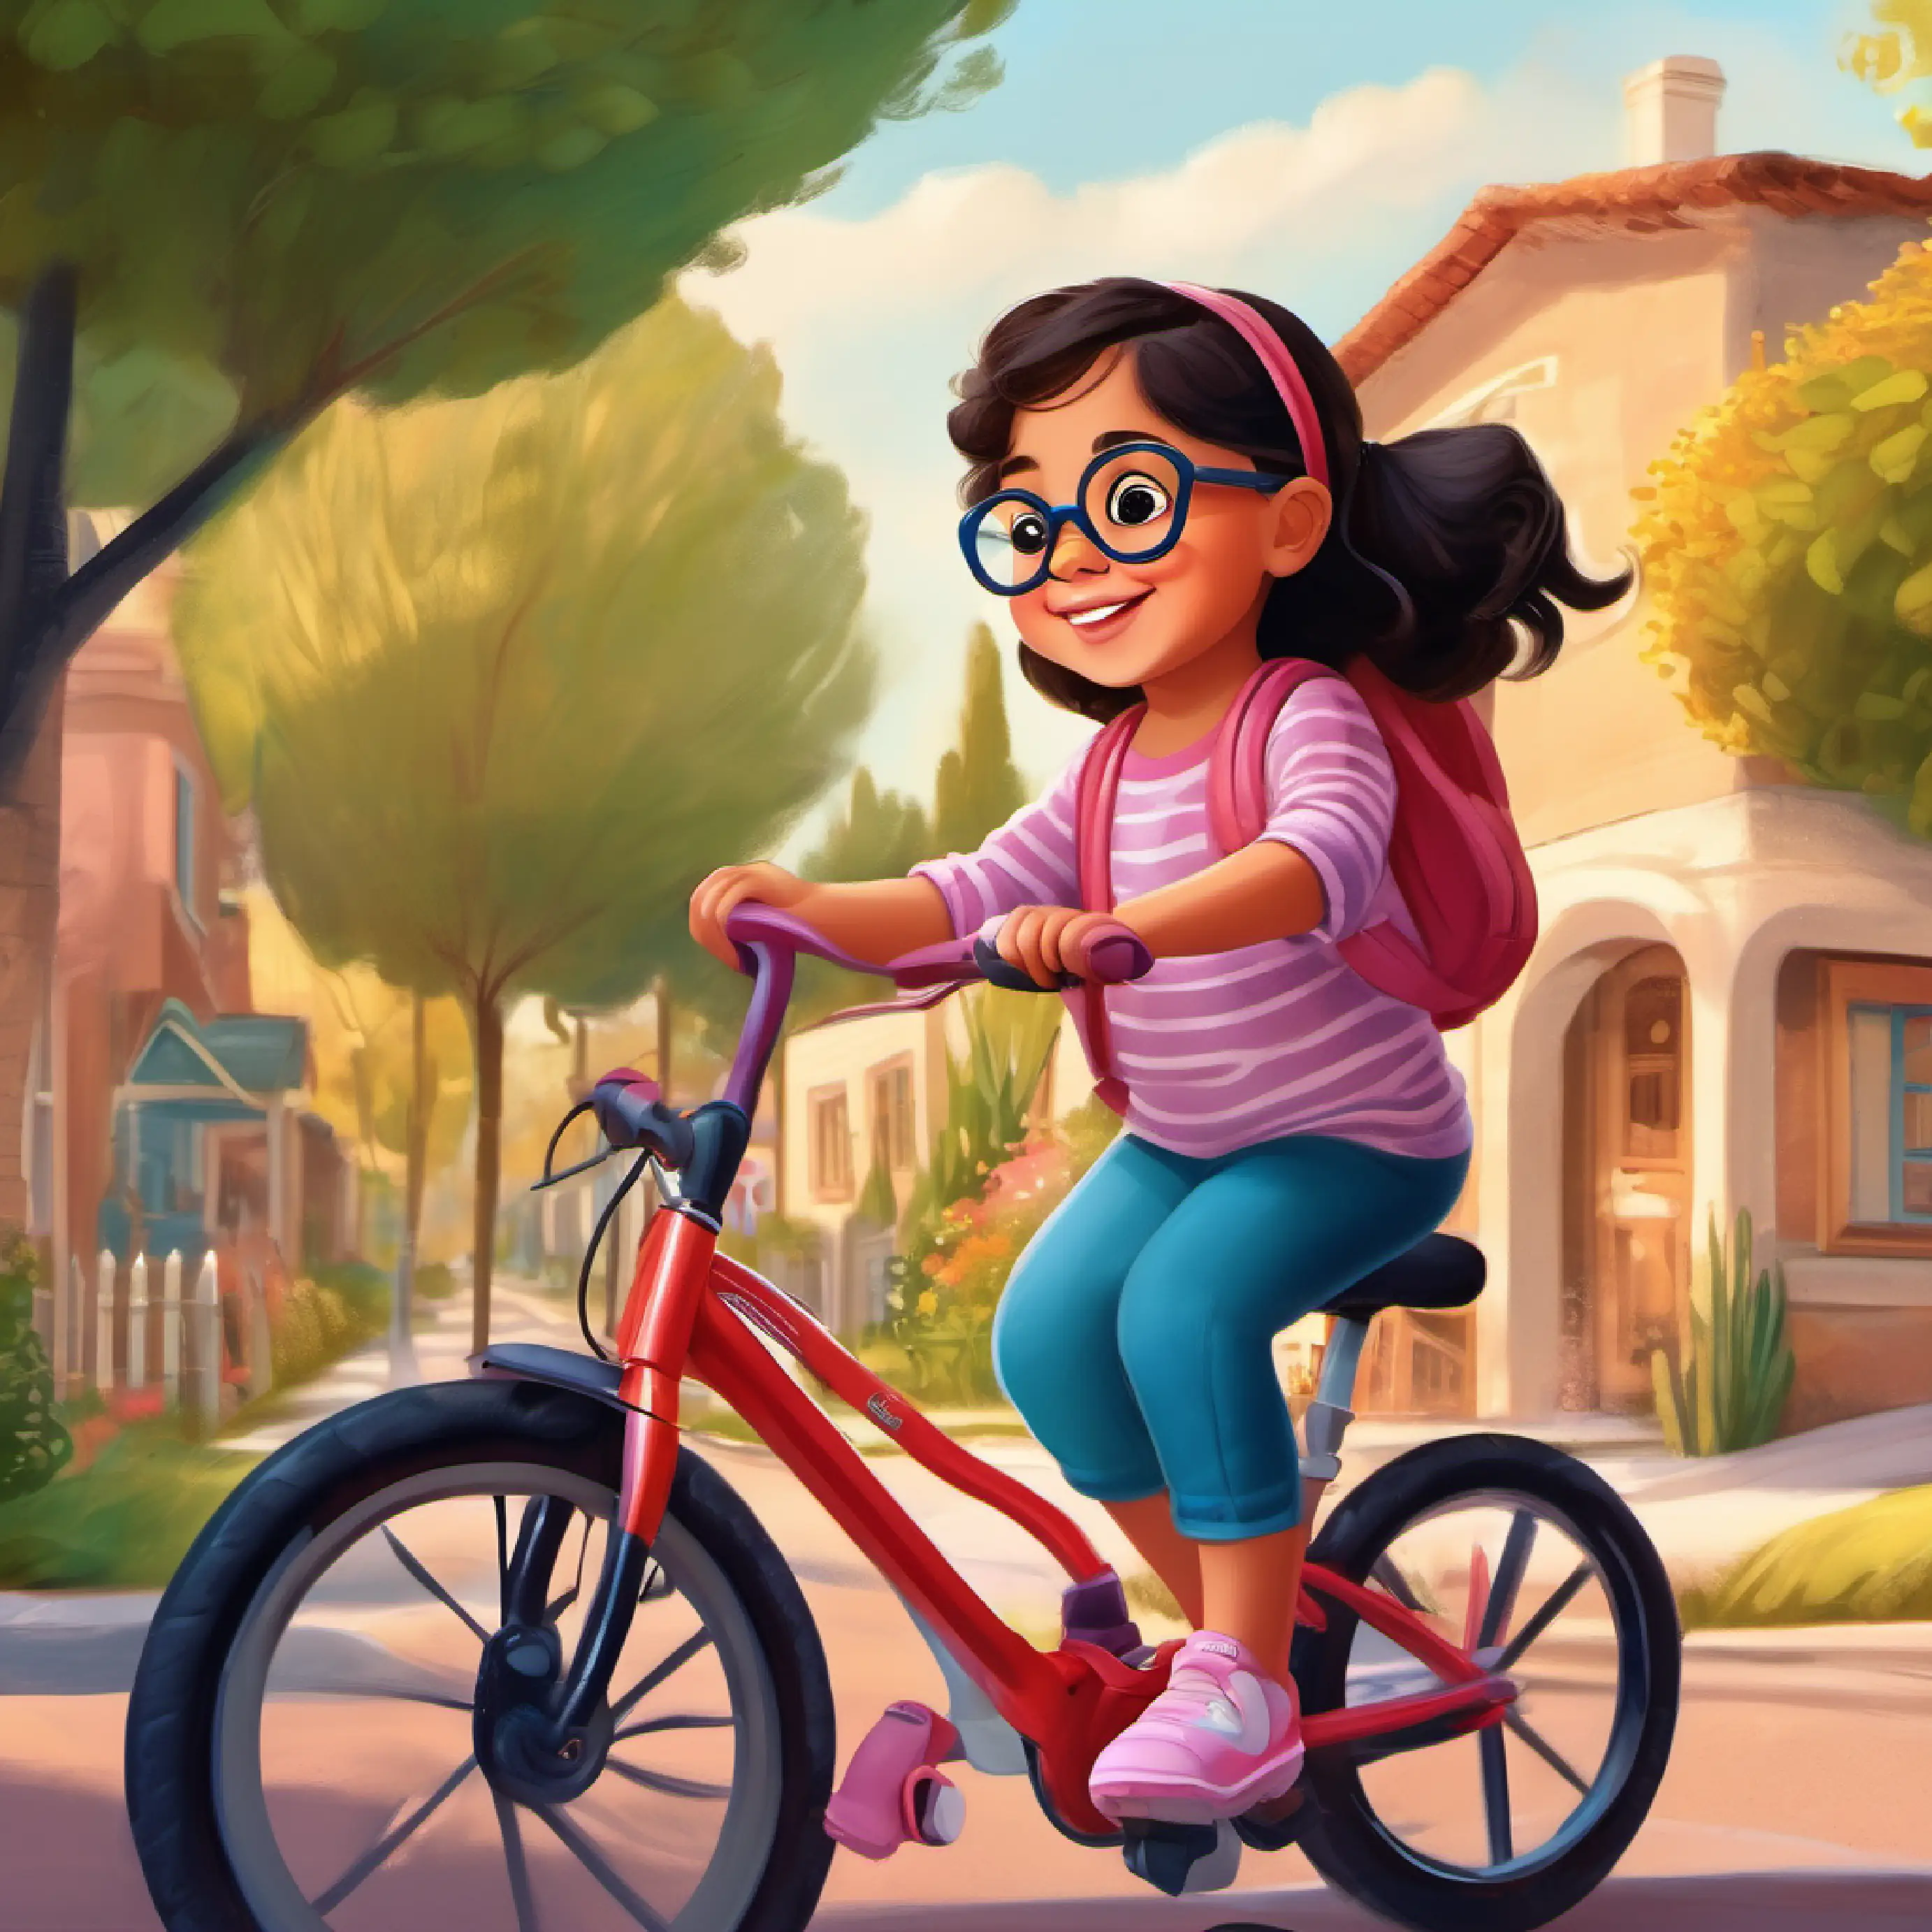 Karen rides her bike around the neighborhood with her mom.